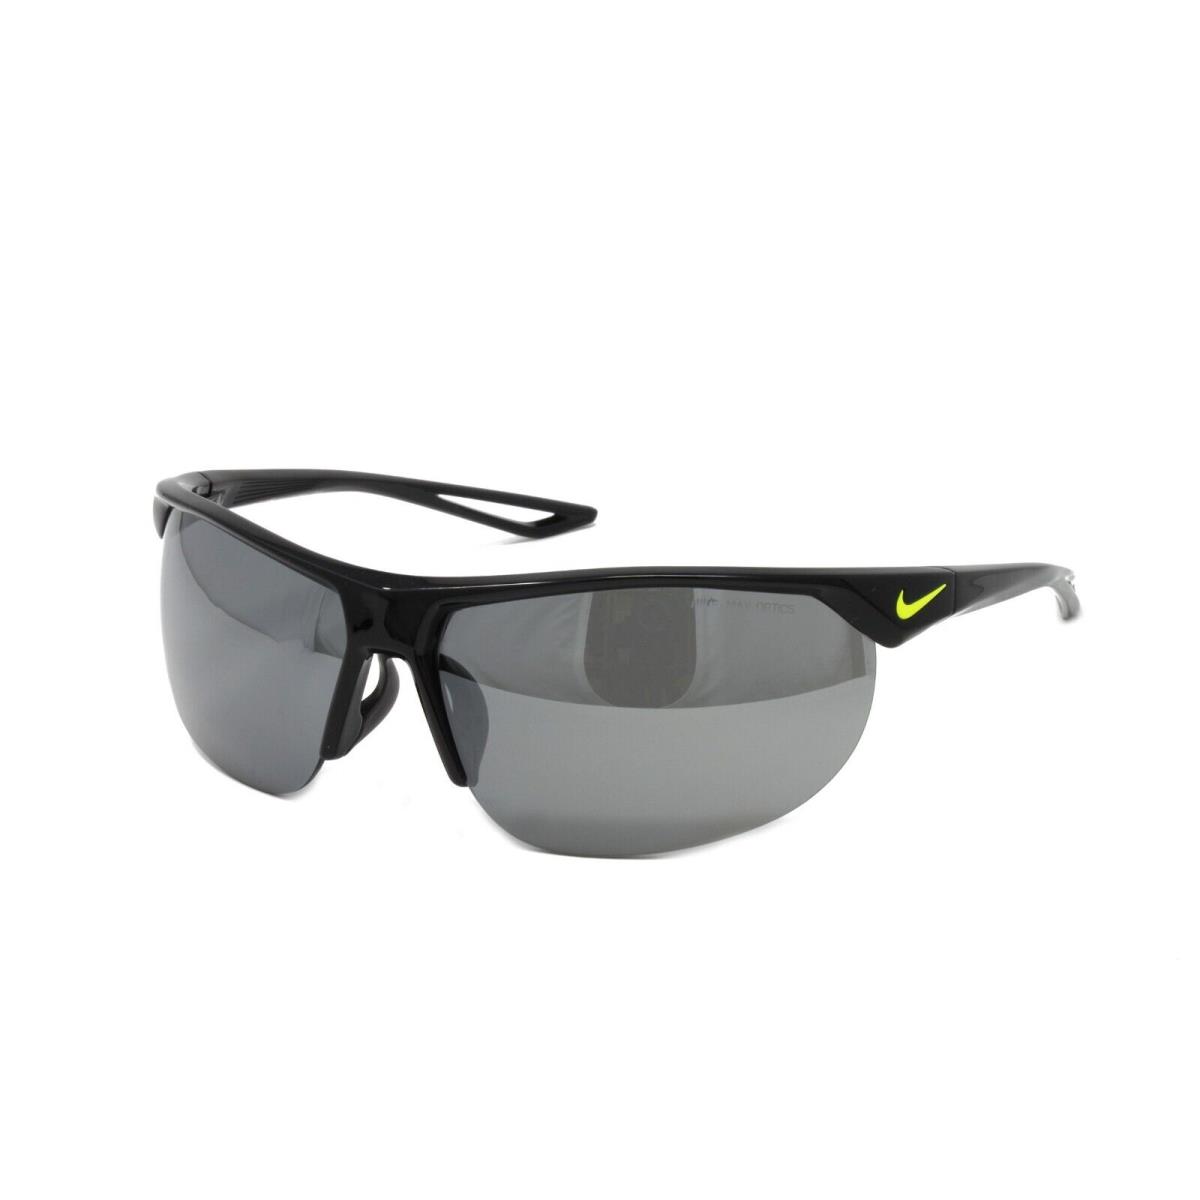 Nike Sunglasses Cross Trainer EV0937 001 Black Volt 67mm Grey Mirror Lens